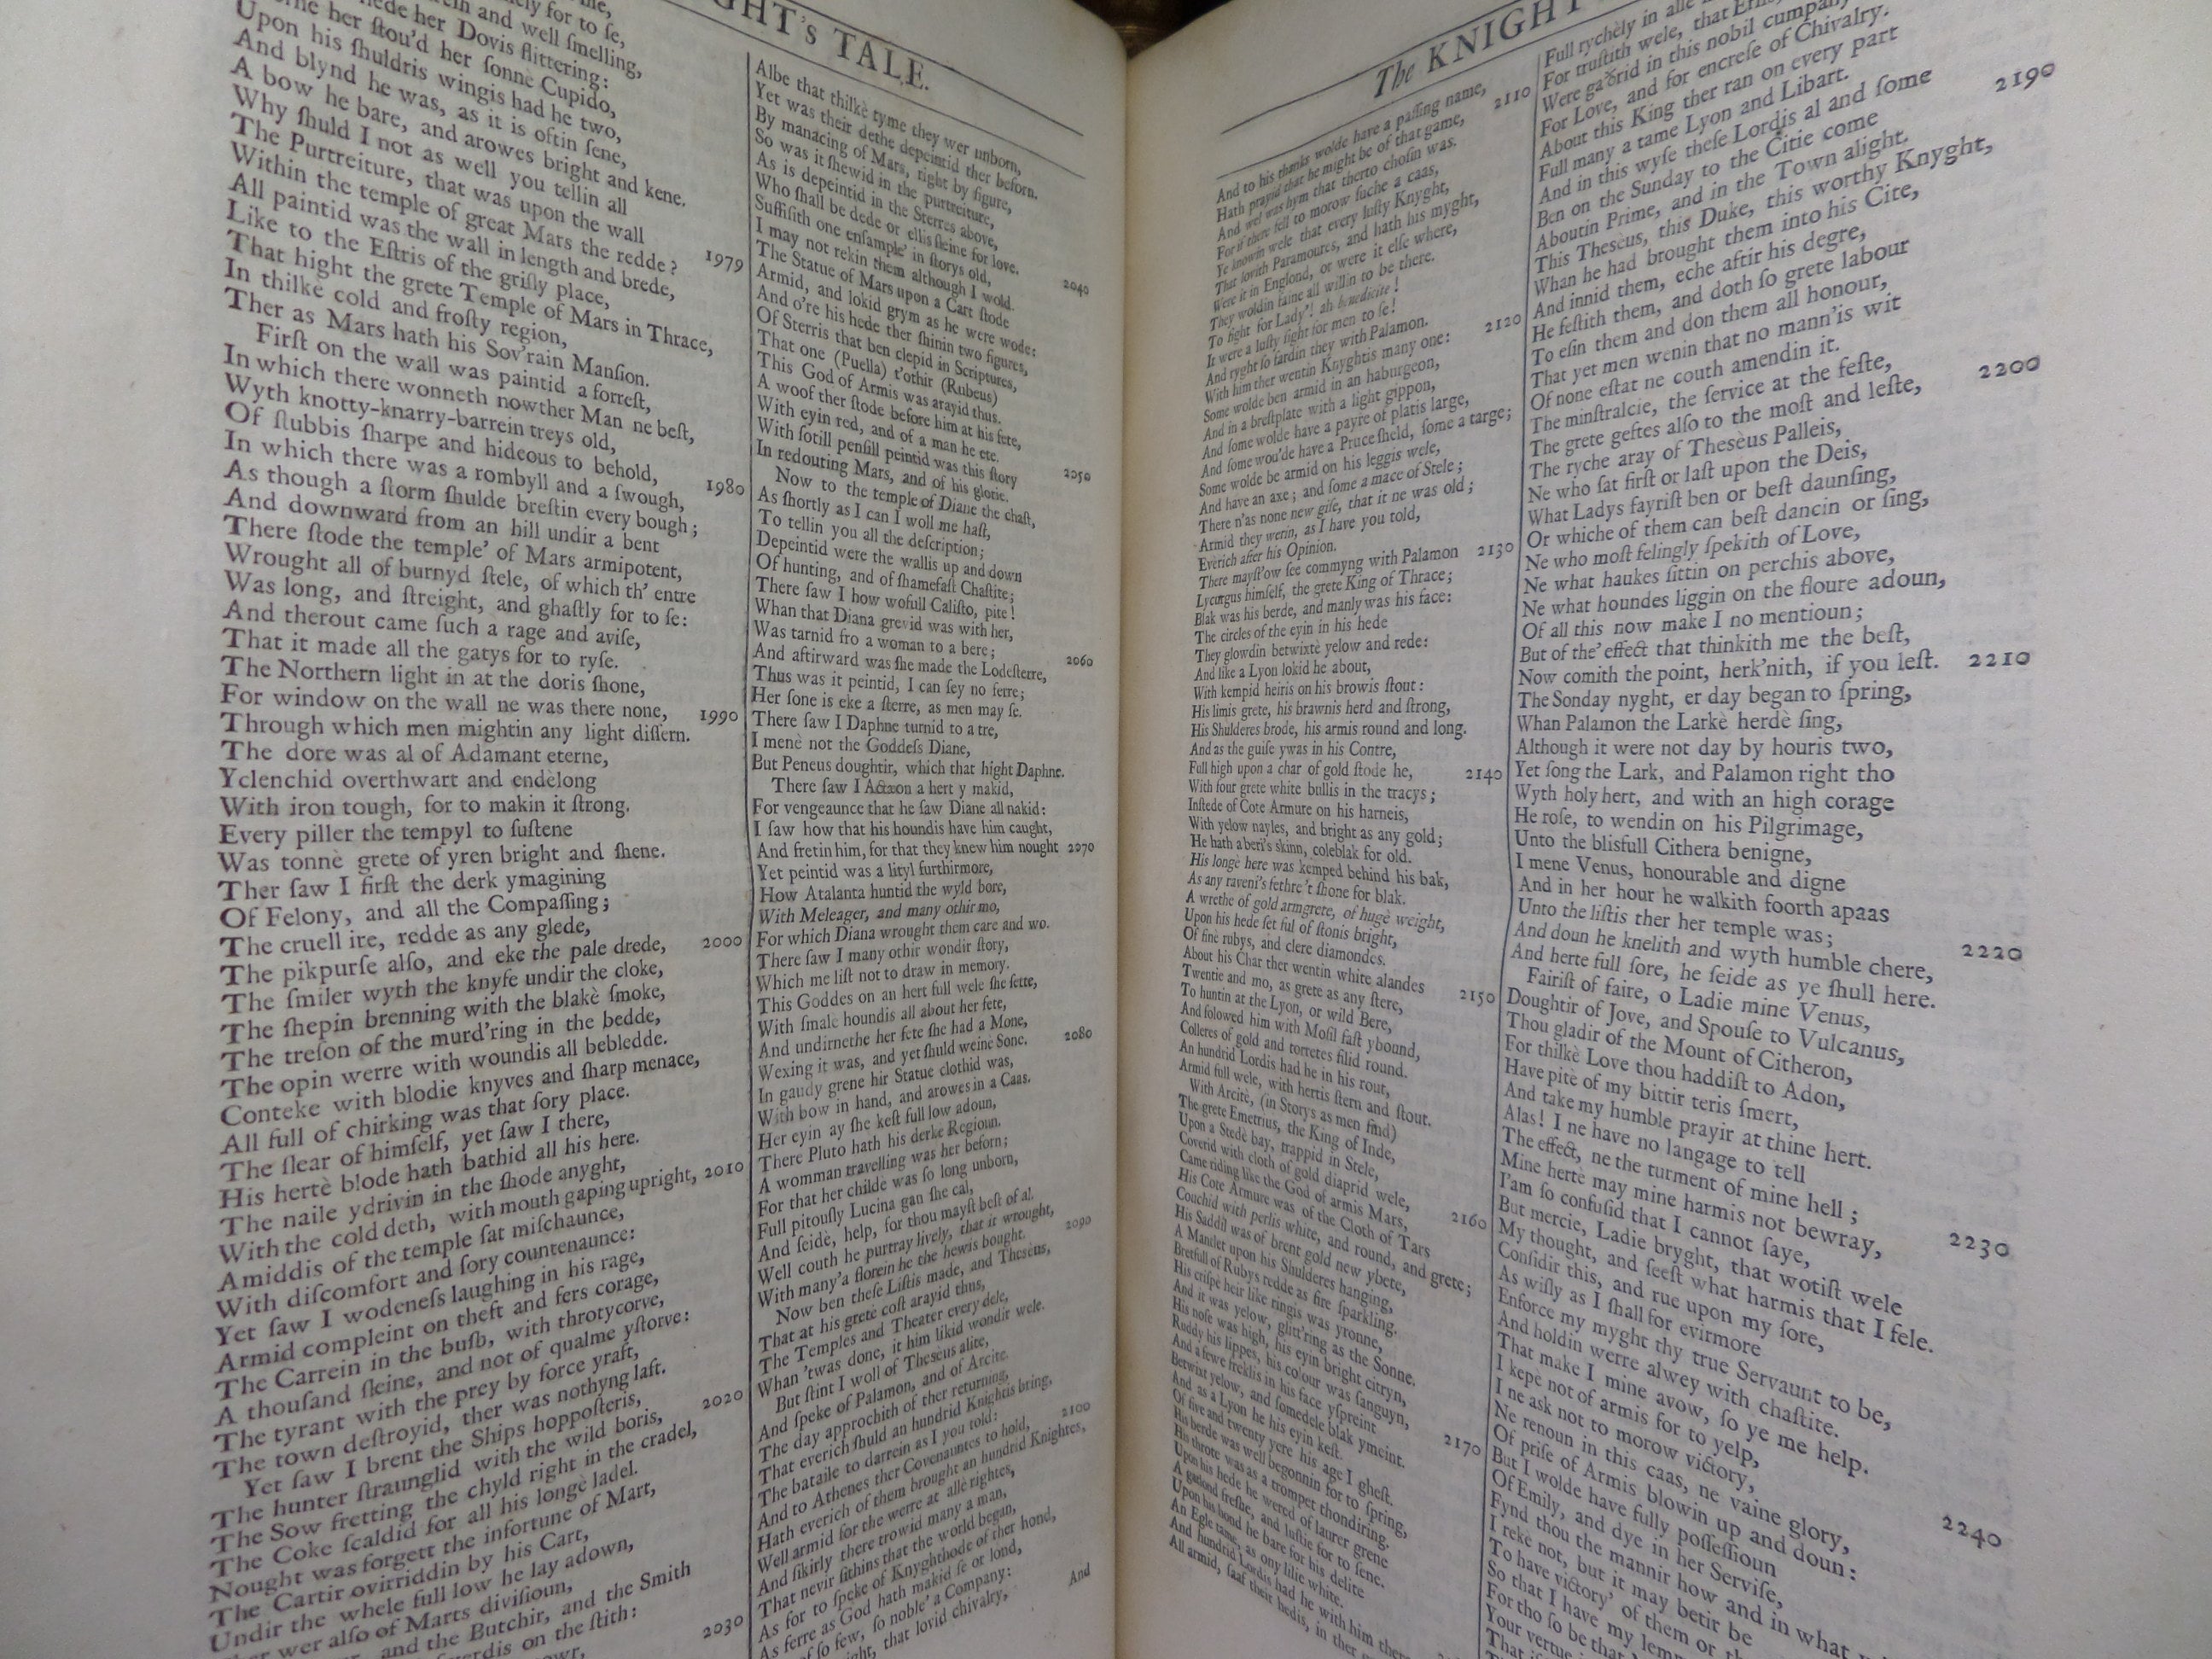 THE WORKS OF GEOFFREY CHAUCER 1721 JOHN URRY FOLIO EDITION